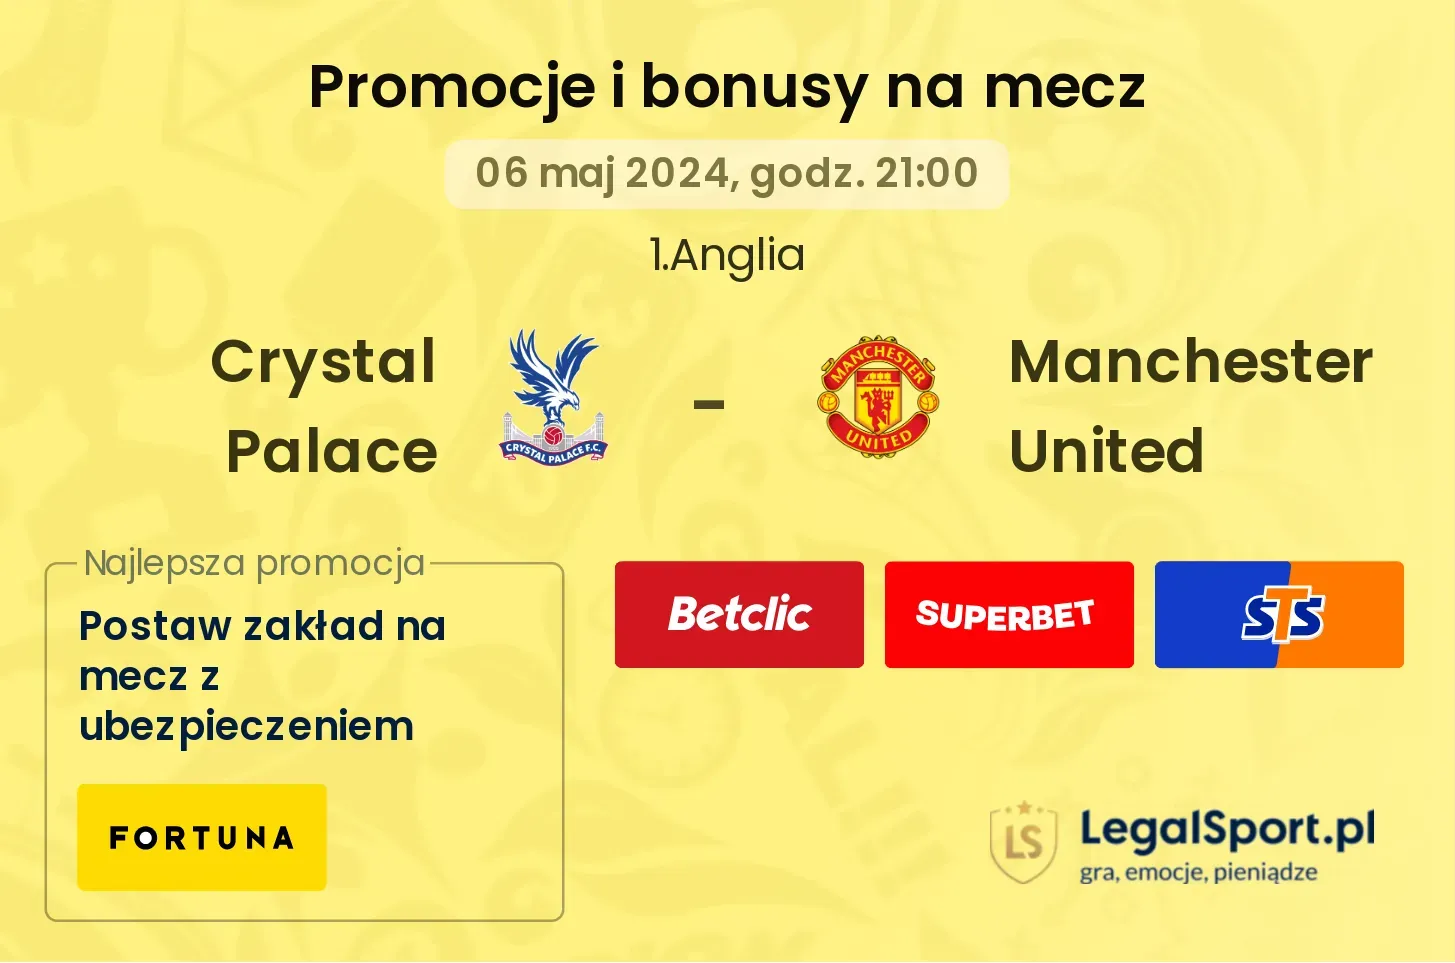 Crystal Palace - Manchester United promocje bonusy na mecz